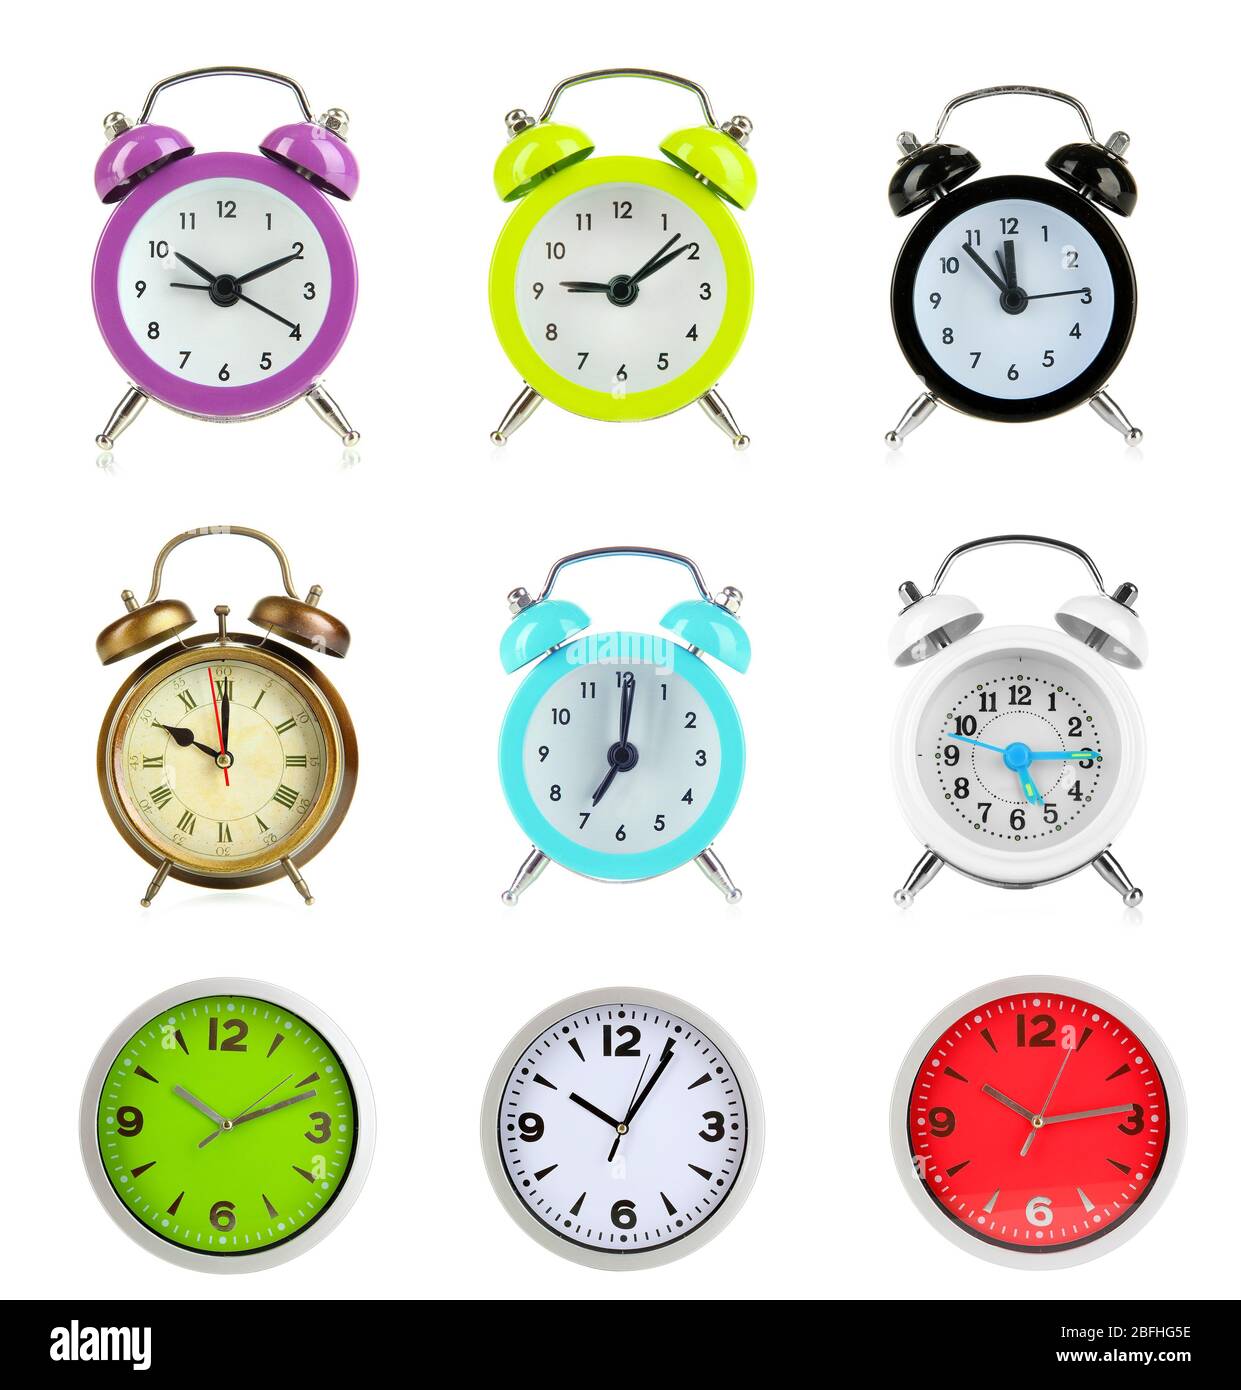 Collage de relojes diferentes Fotografía de stock - Alamy